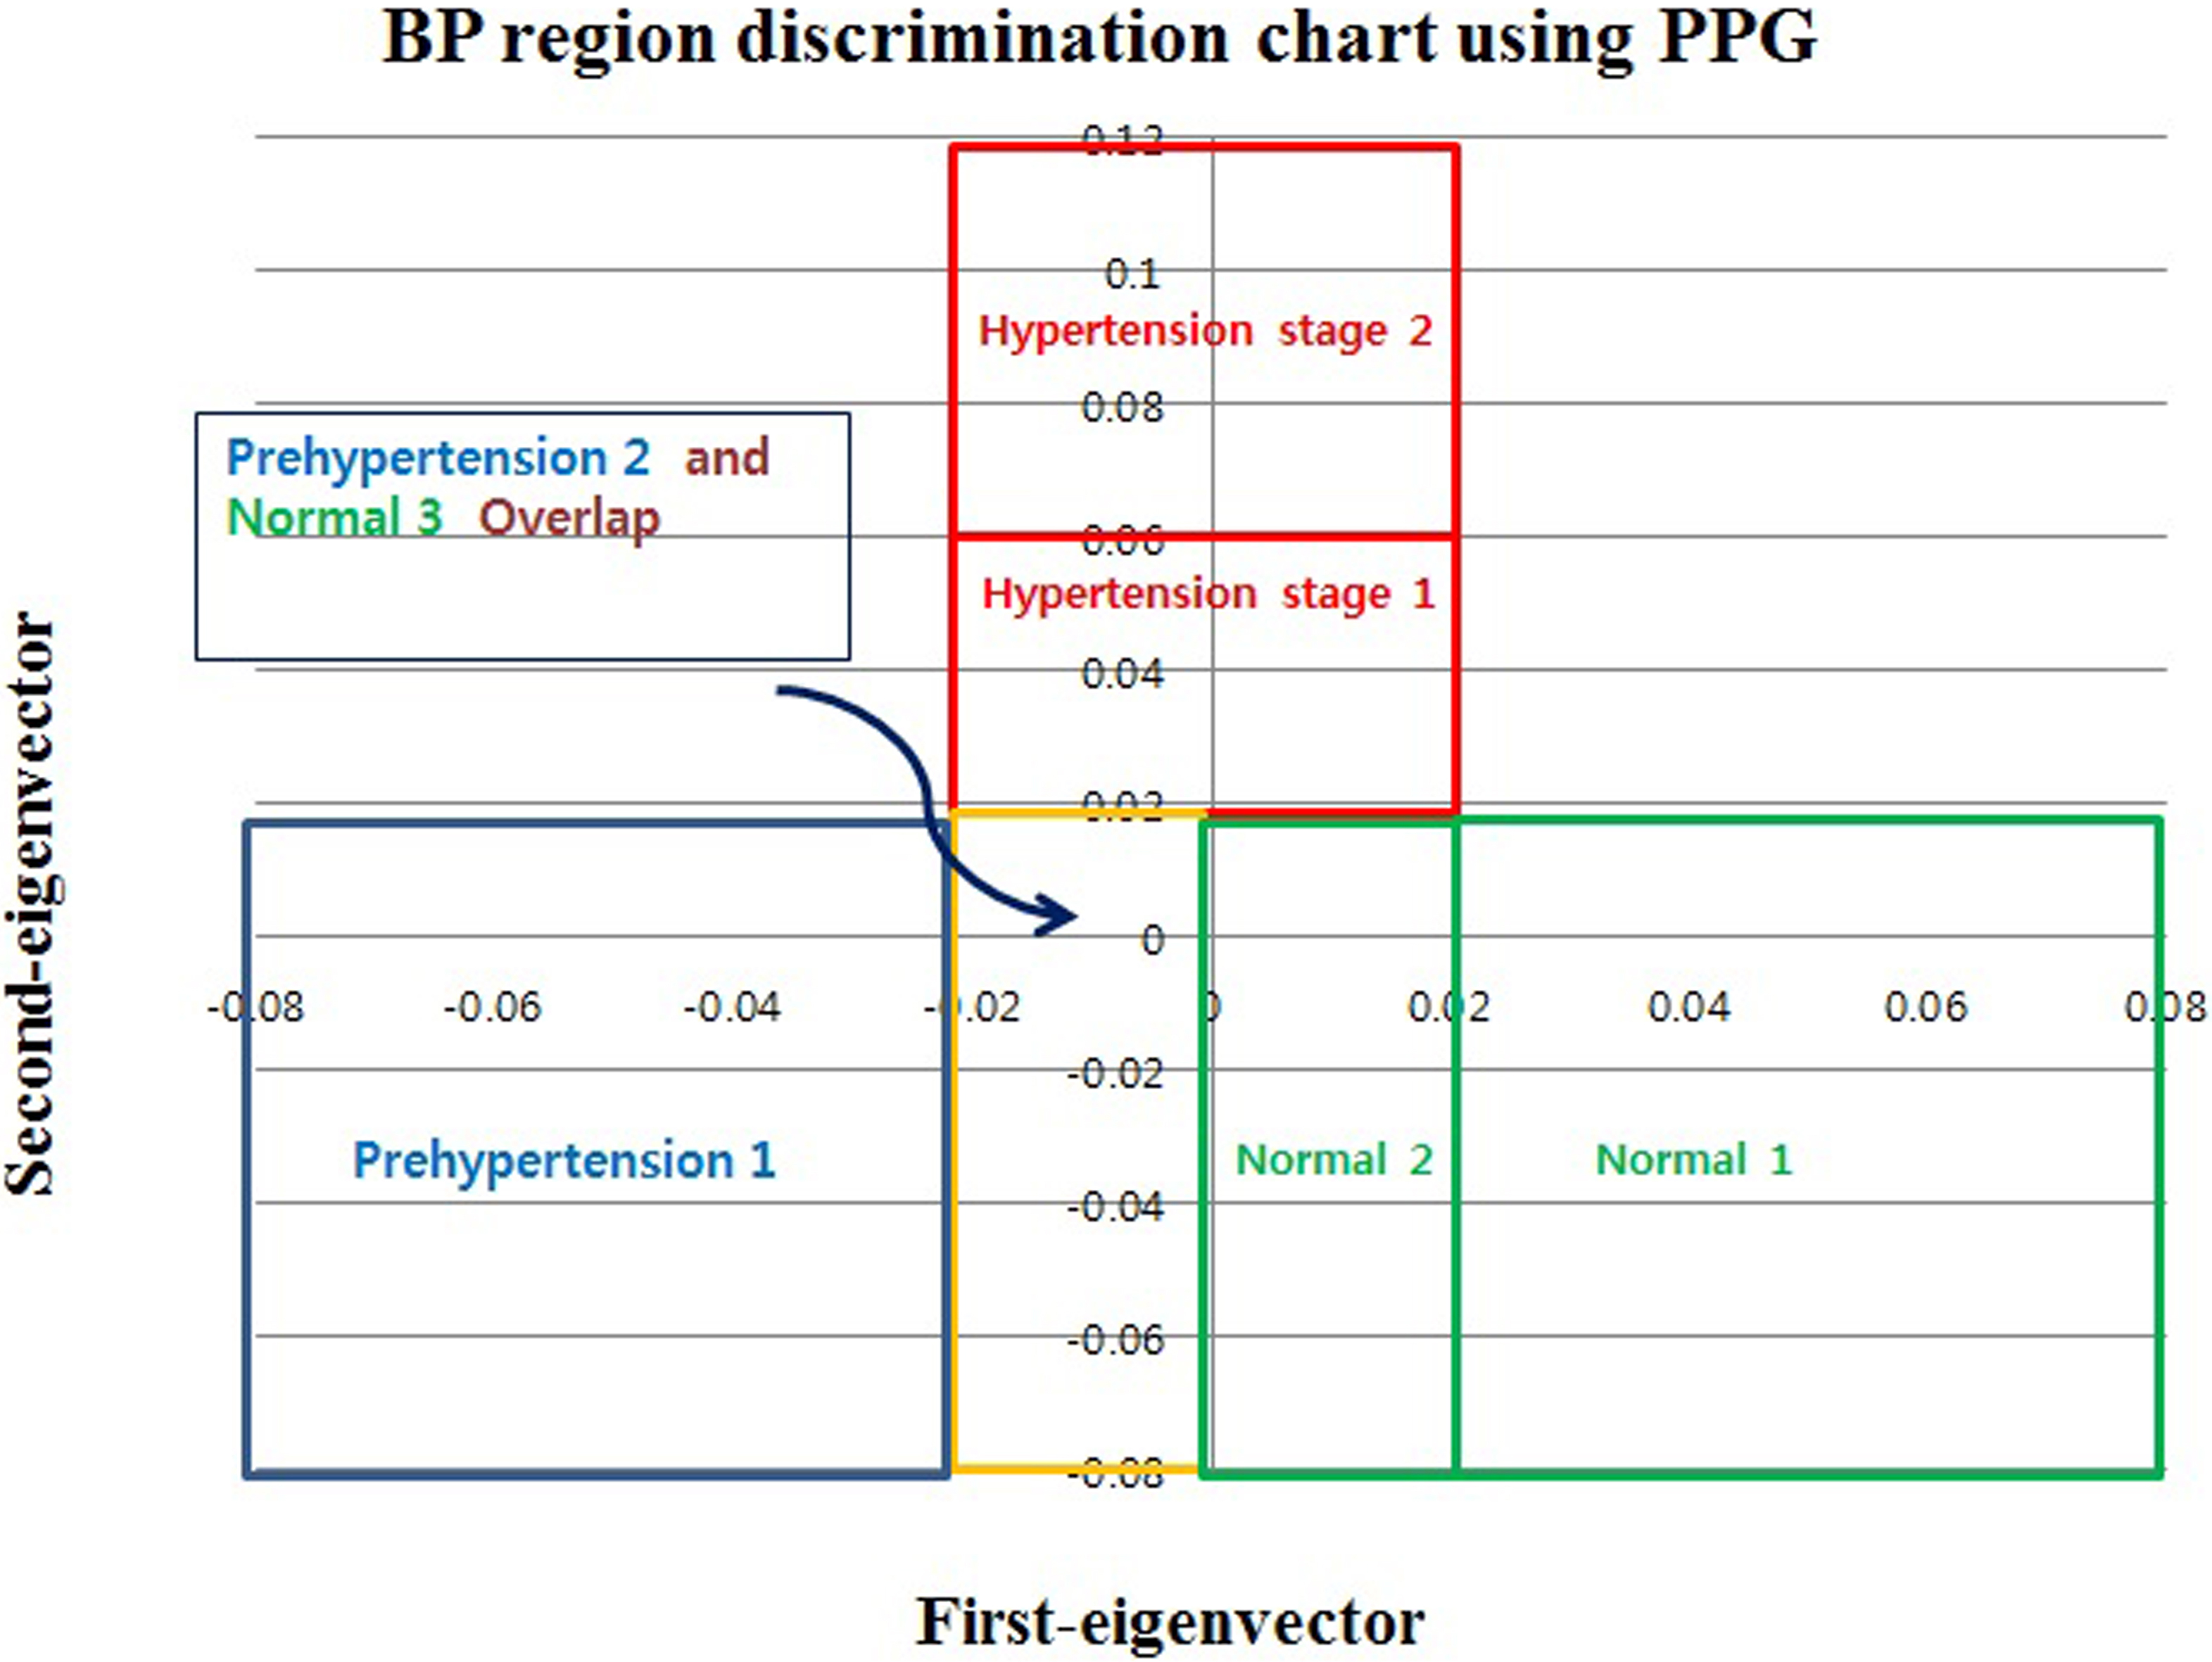 BP region discrimination chart using PPG.